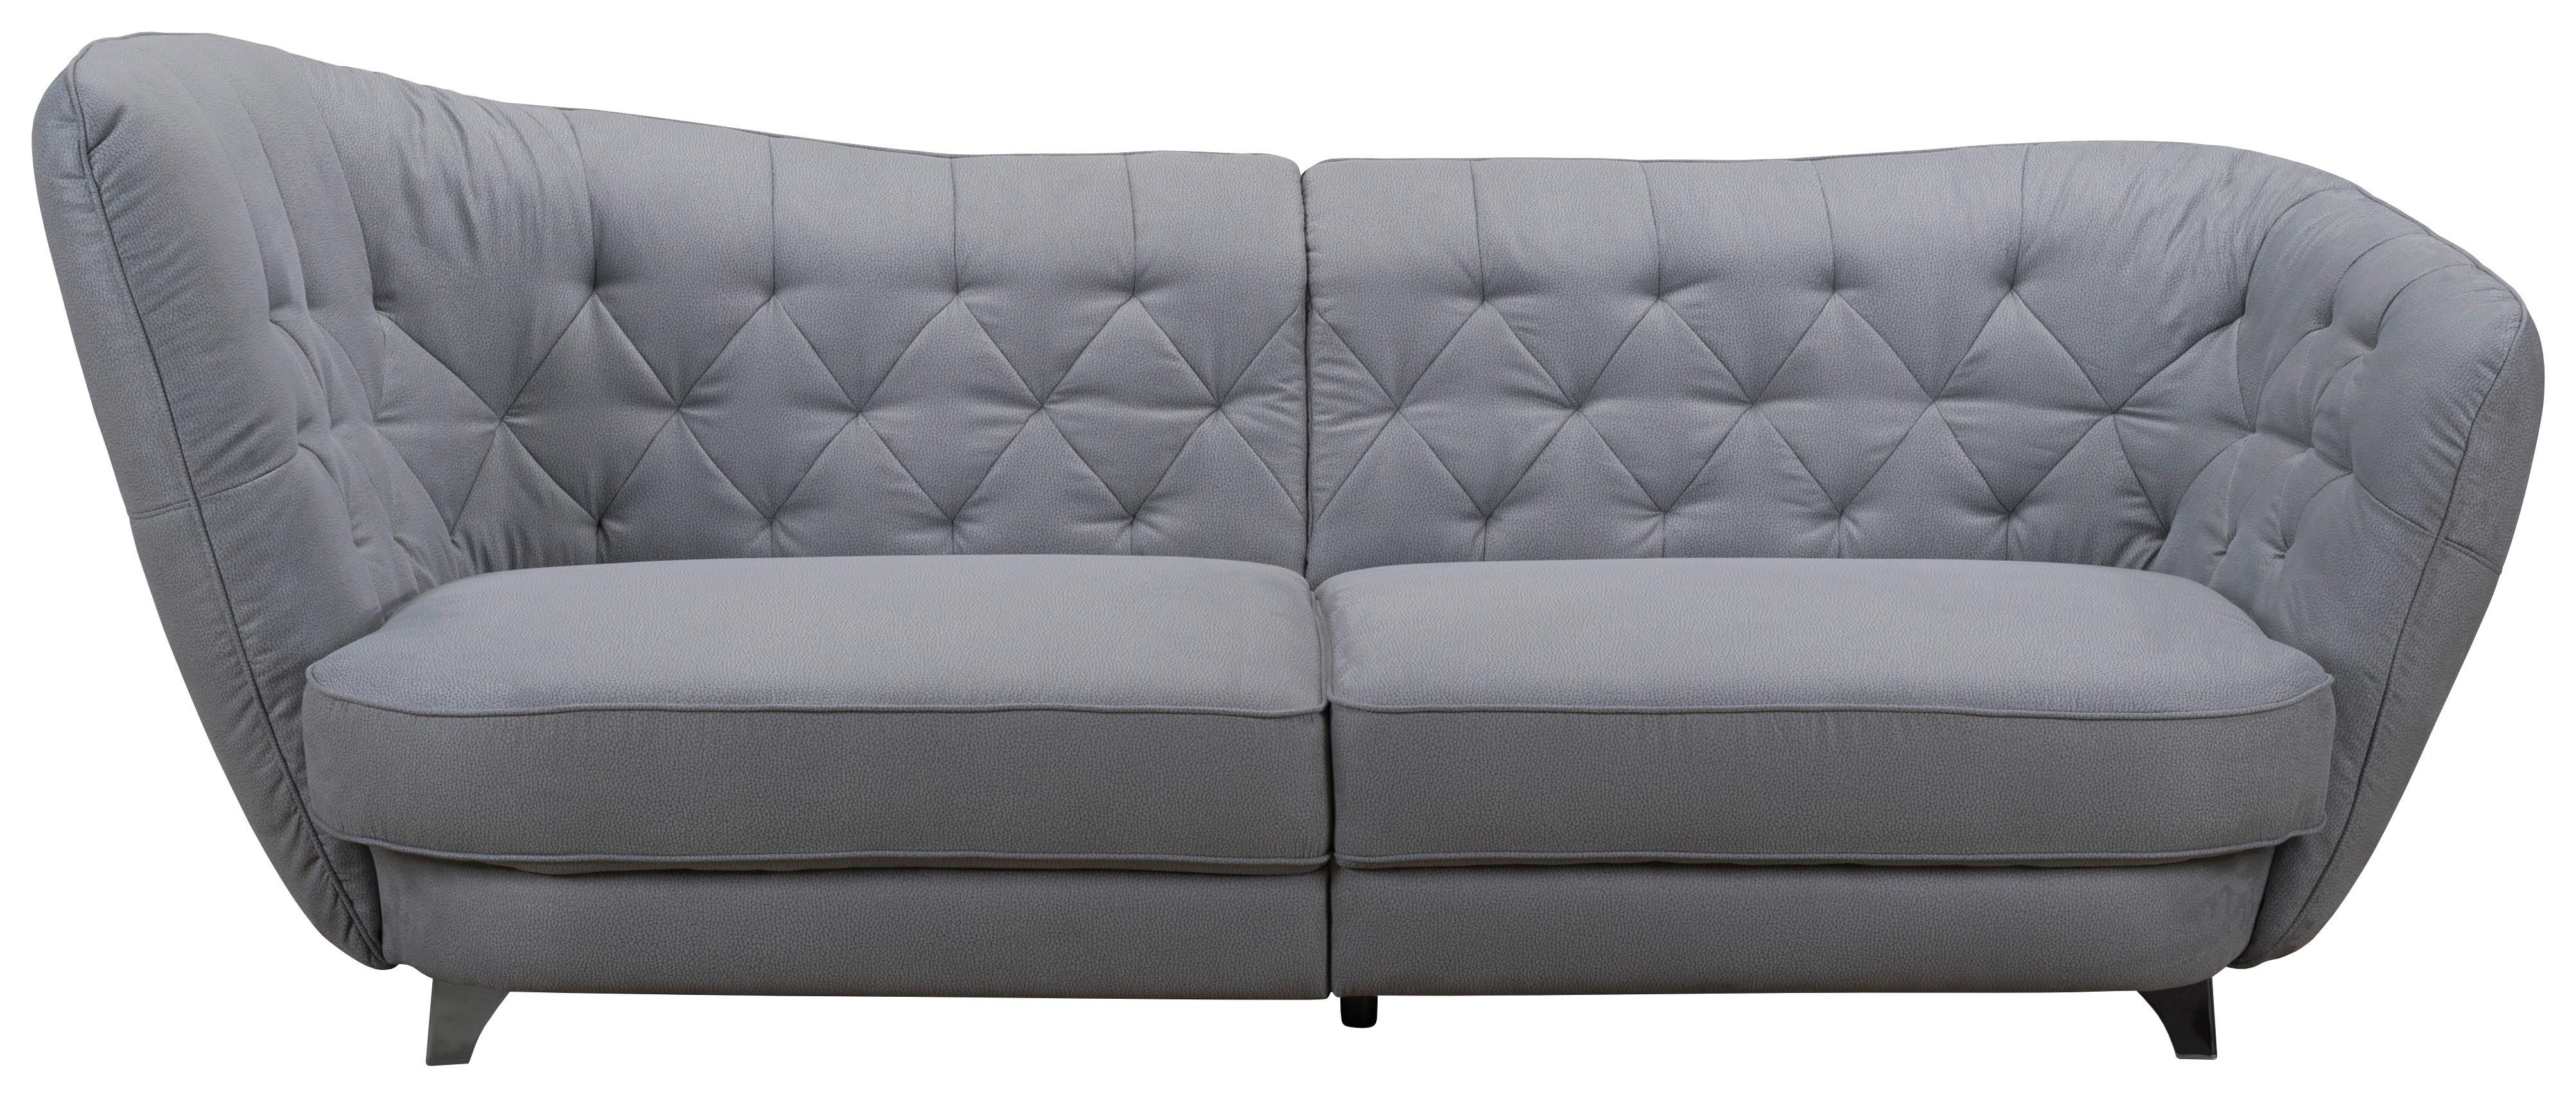 Big Sofa mit Echtem Rücken Retro B: 256 cm Grau - Chromfarben/Grau, MODERN, Textil (256/85/115cm) - MID.YOU